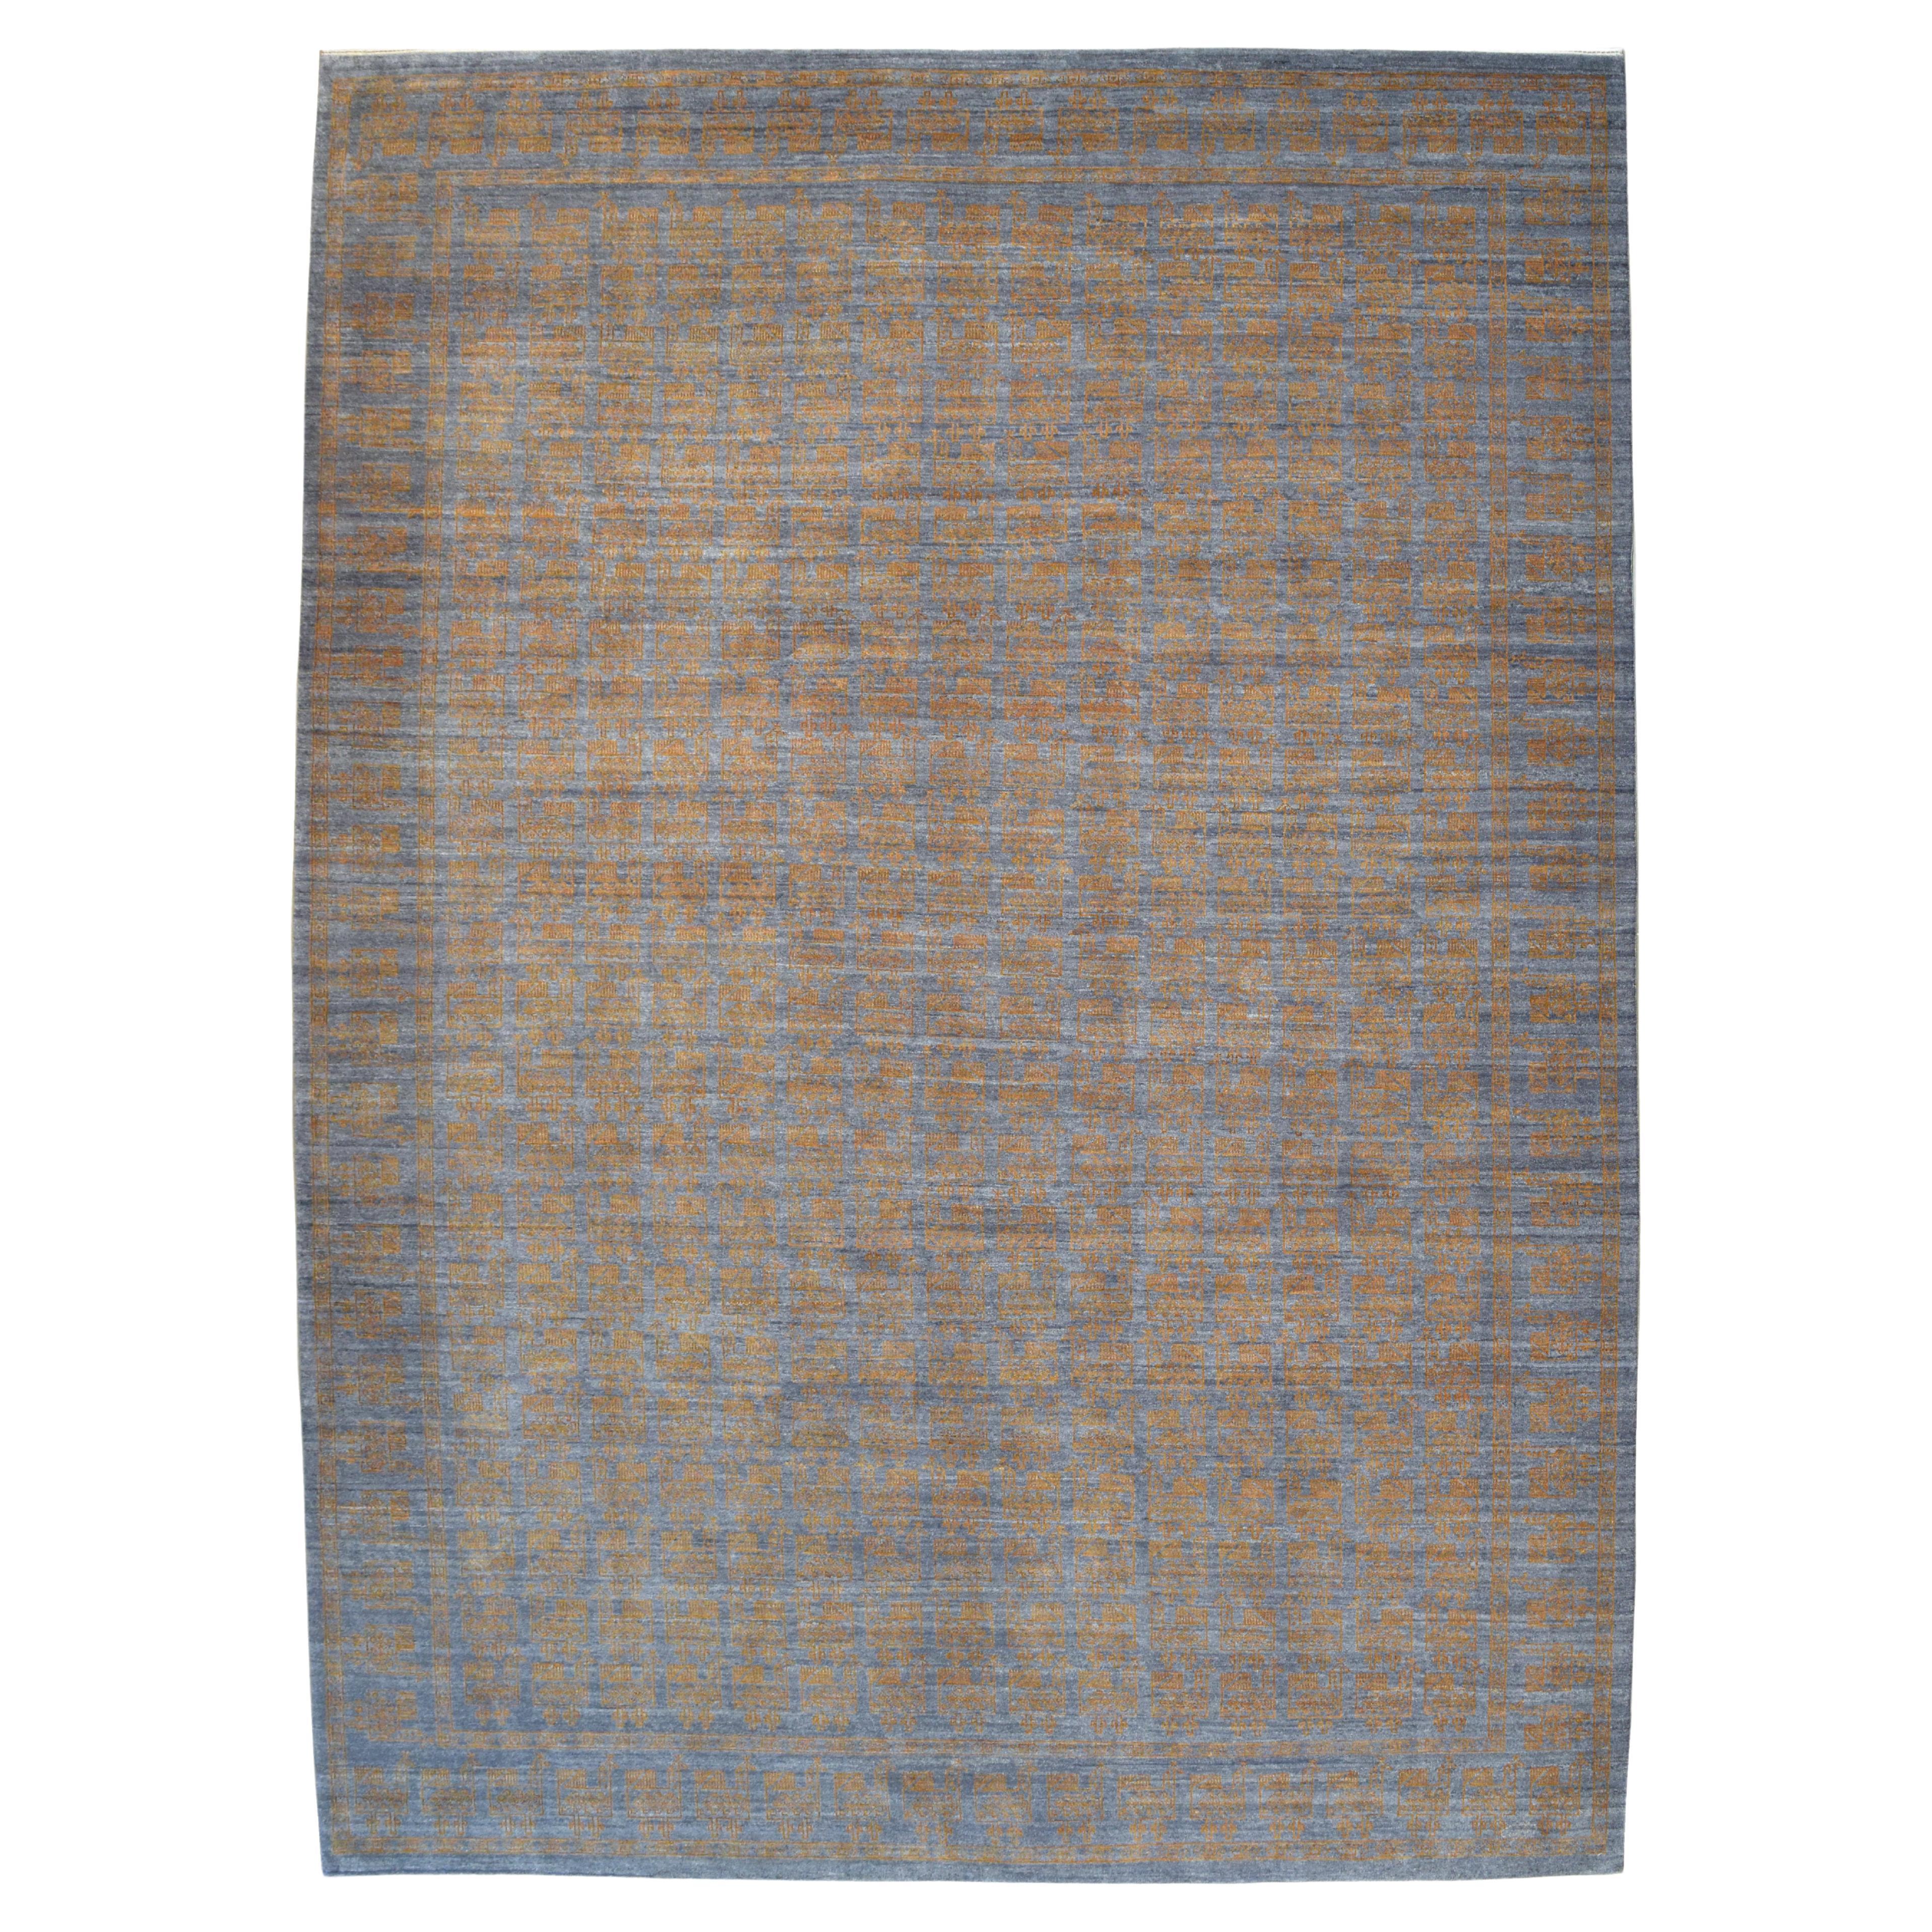 Orley Shabahang, Orange and Gray Modern Peacock Carpet, Wool, 9' x 12'